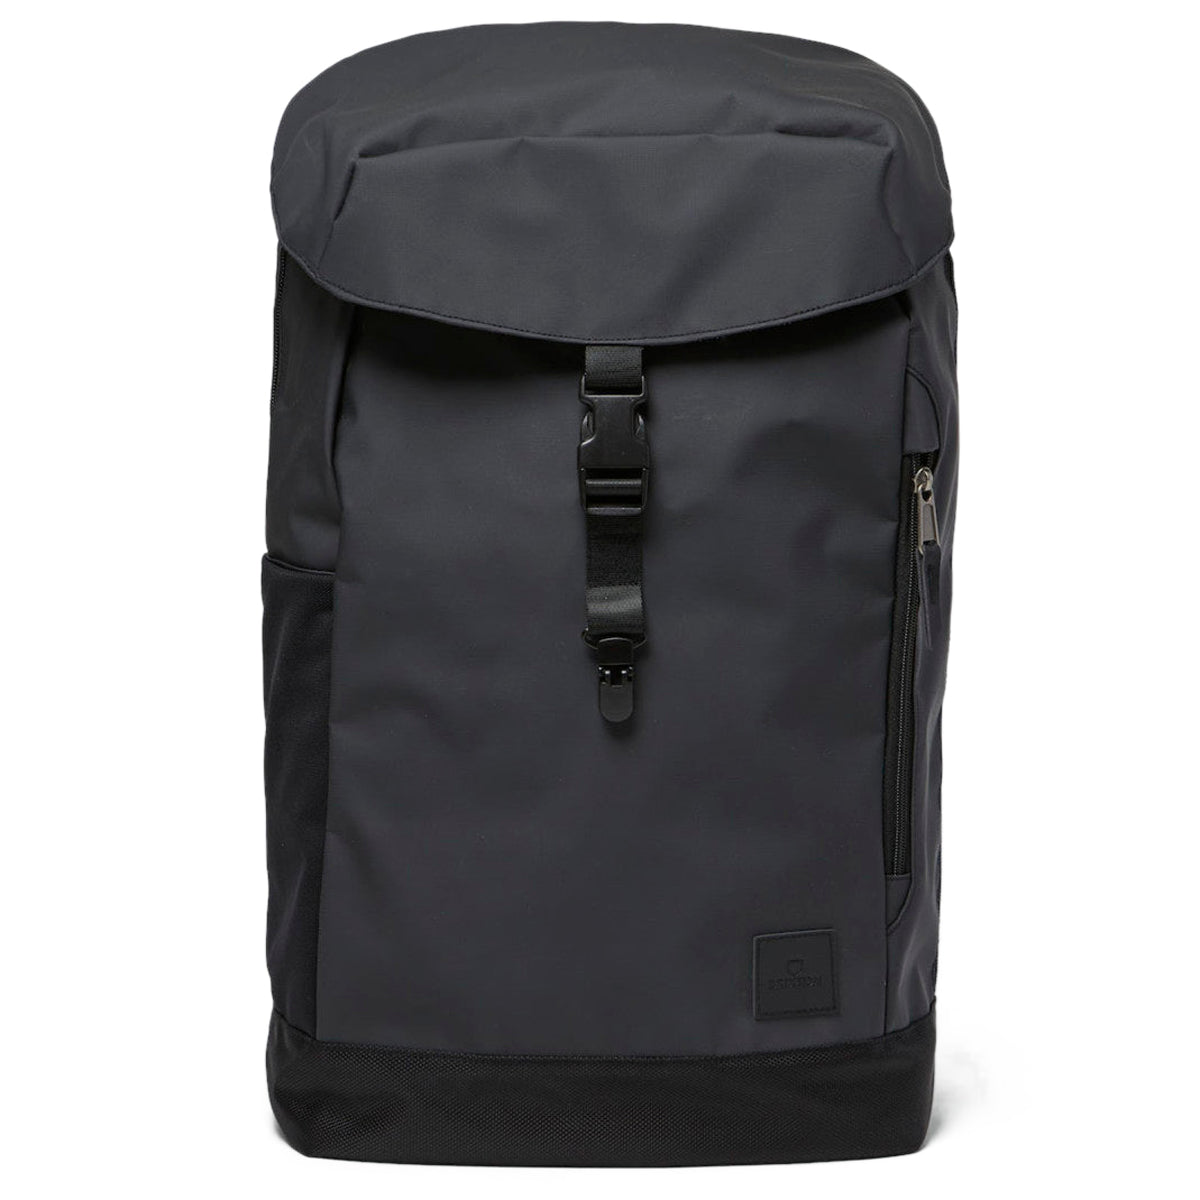 Brixton Commuter Backpack - Black image 1